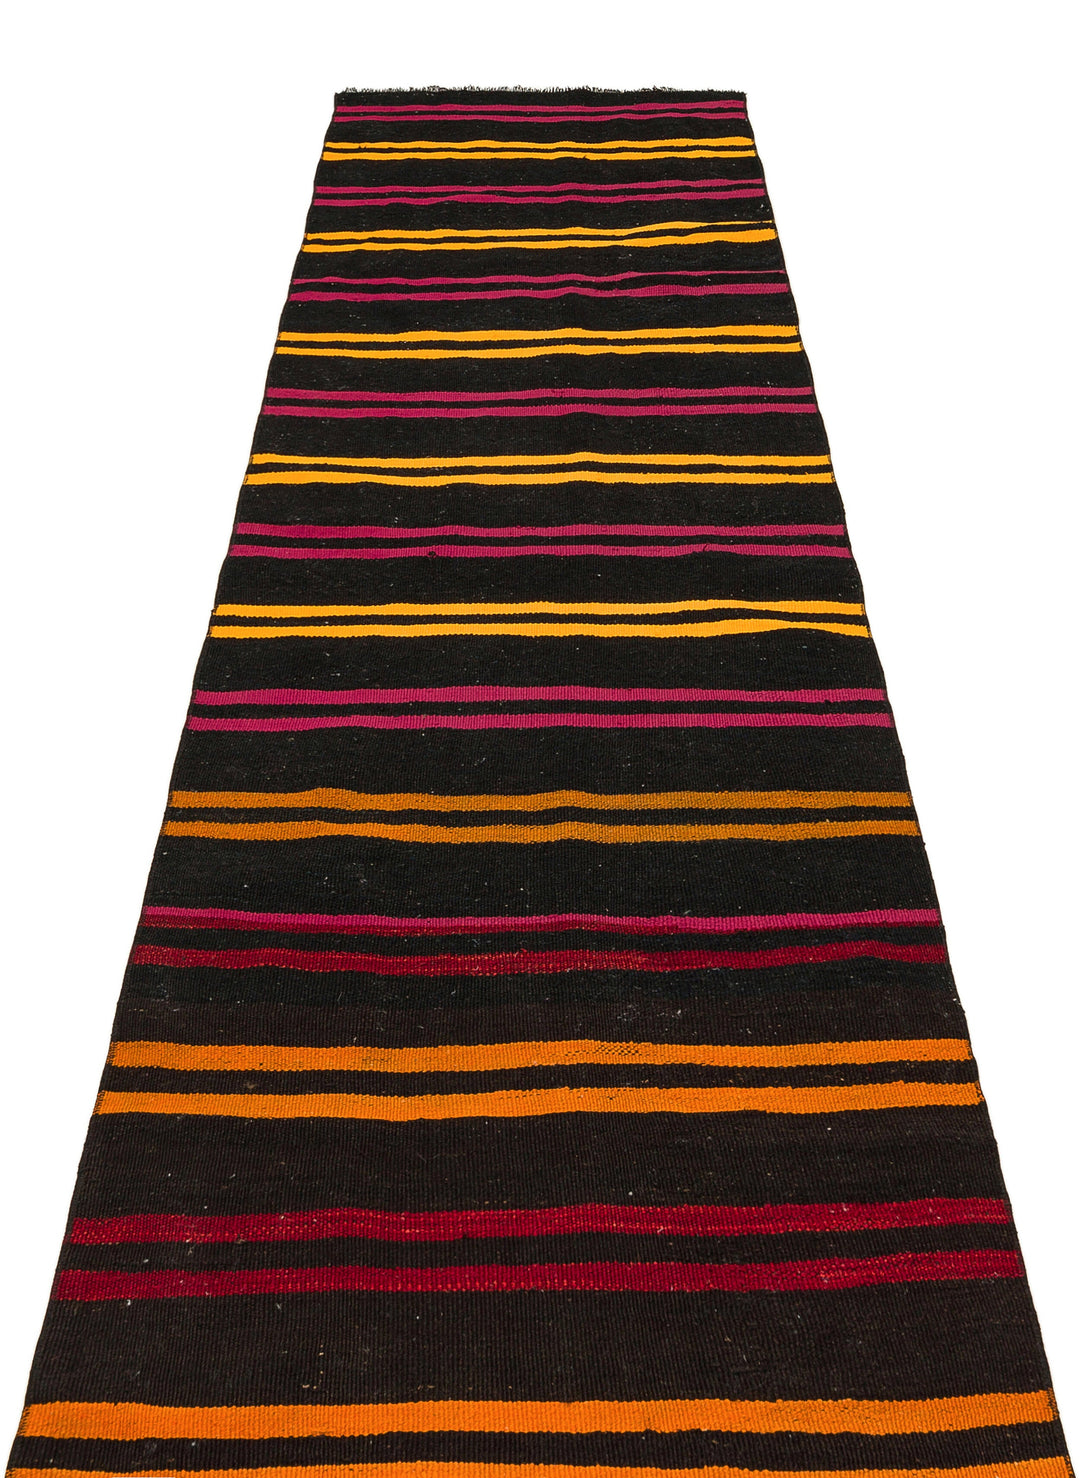 Cretan Black Striped Wool Hand-Woven Carpet 082 x 300